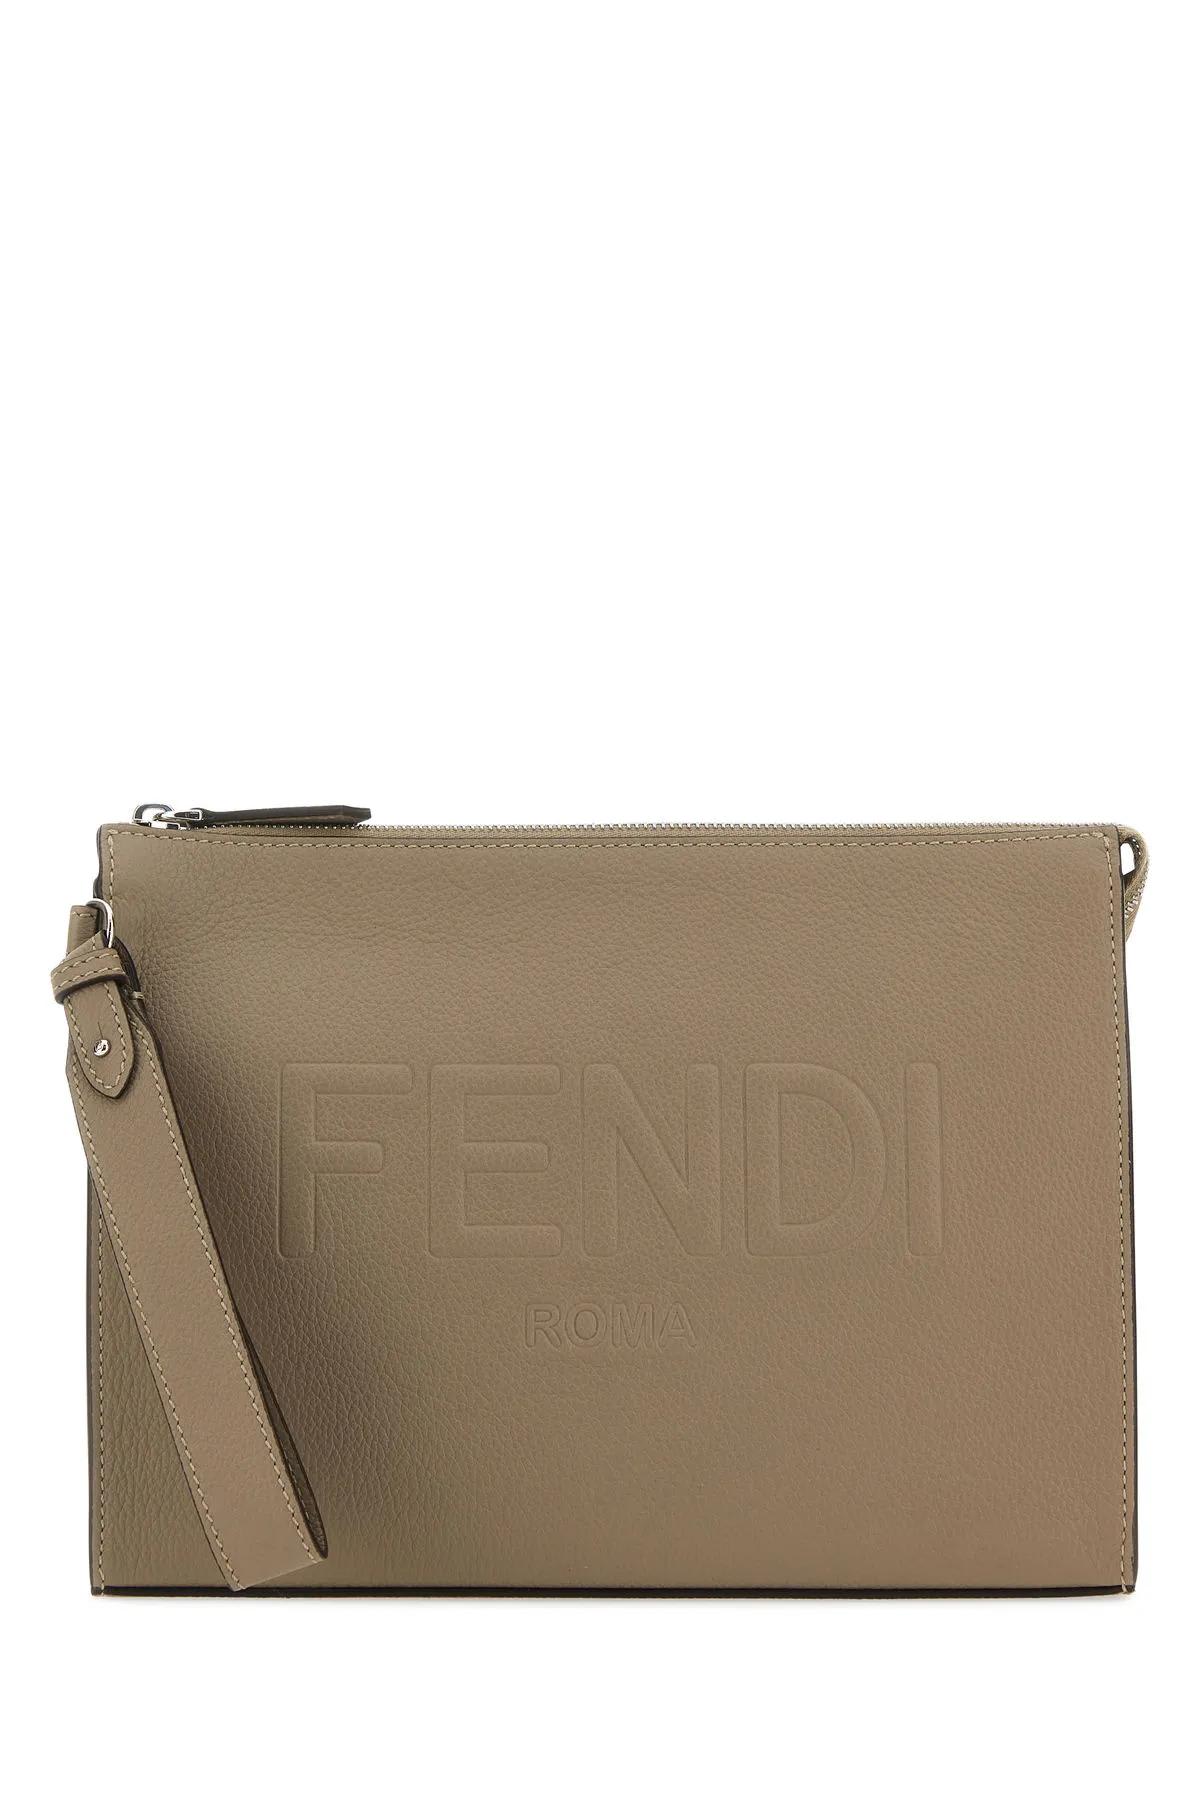 Fendi Leather Clutch